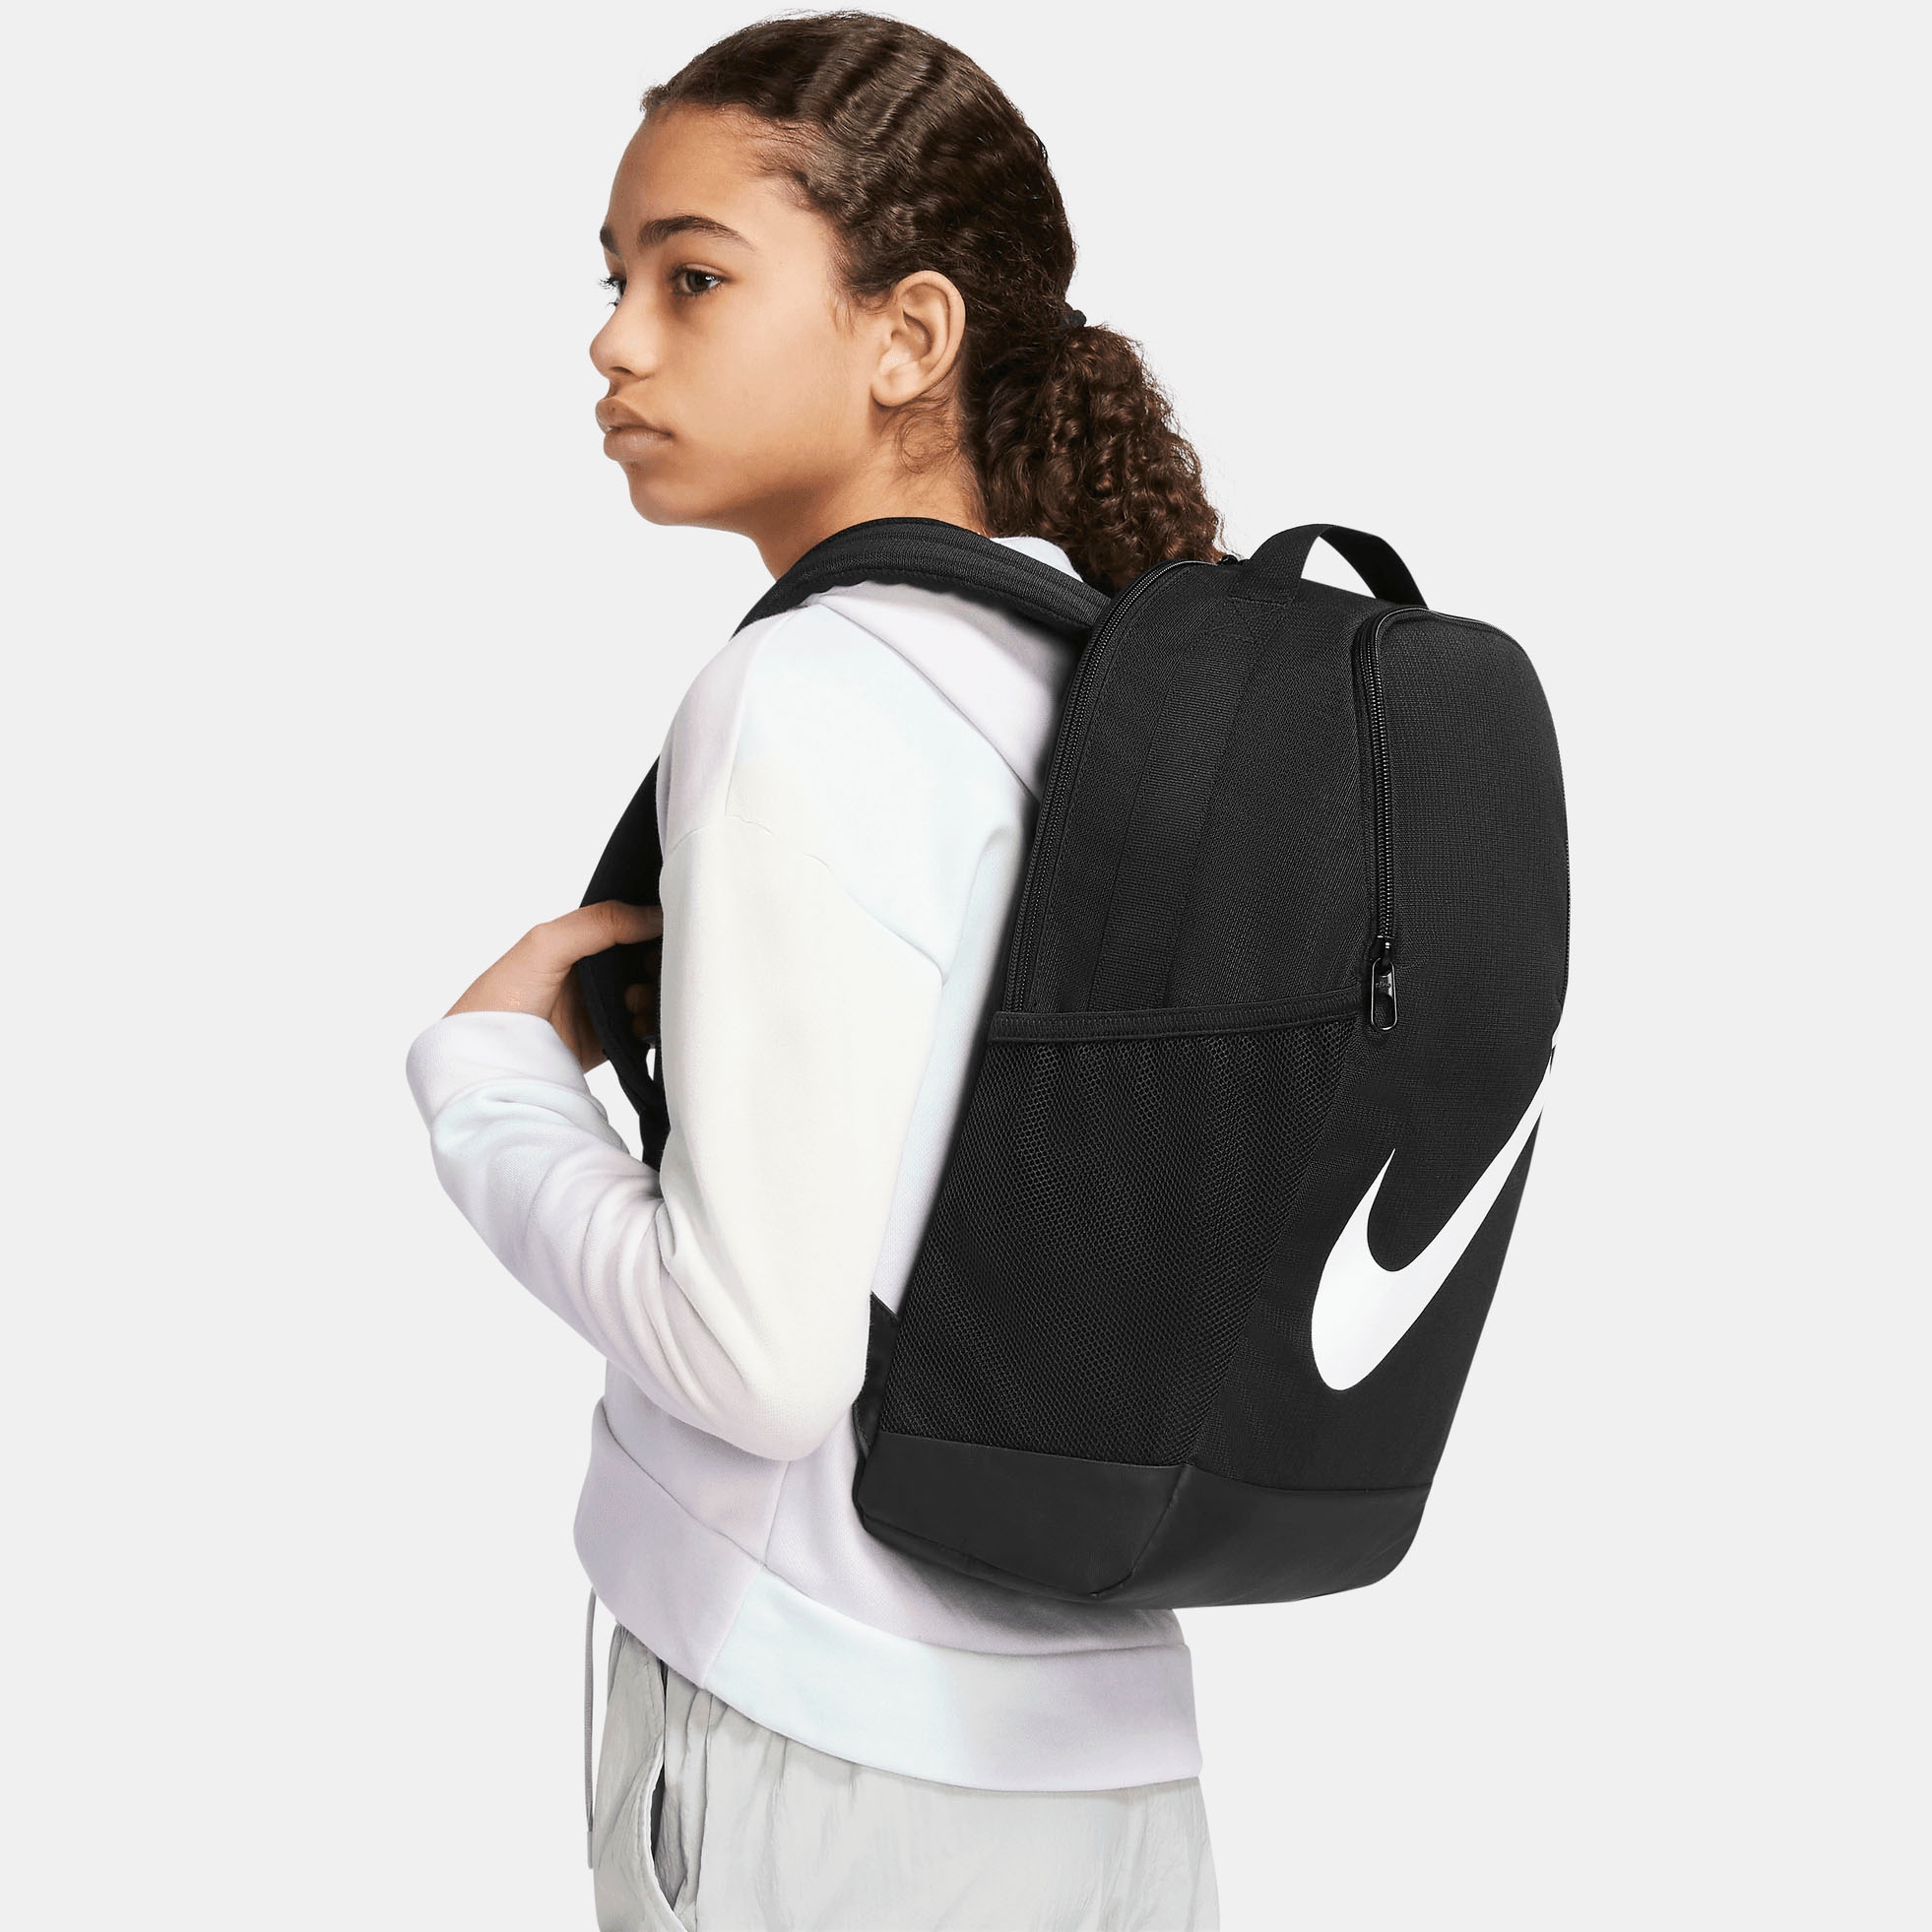 Entdecke NK »Y SP - - Nike BKPK auf BRSLA Sportrucksack für Kinder«